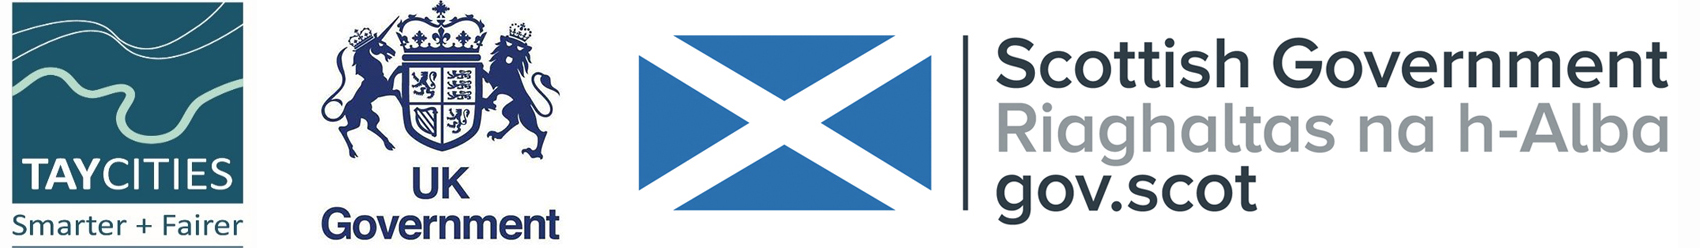 three logos - TayCities, UK Government and the Scottish Government